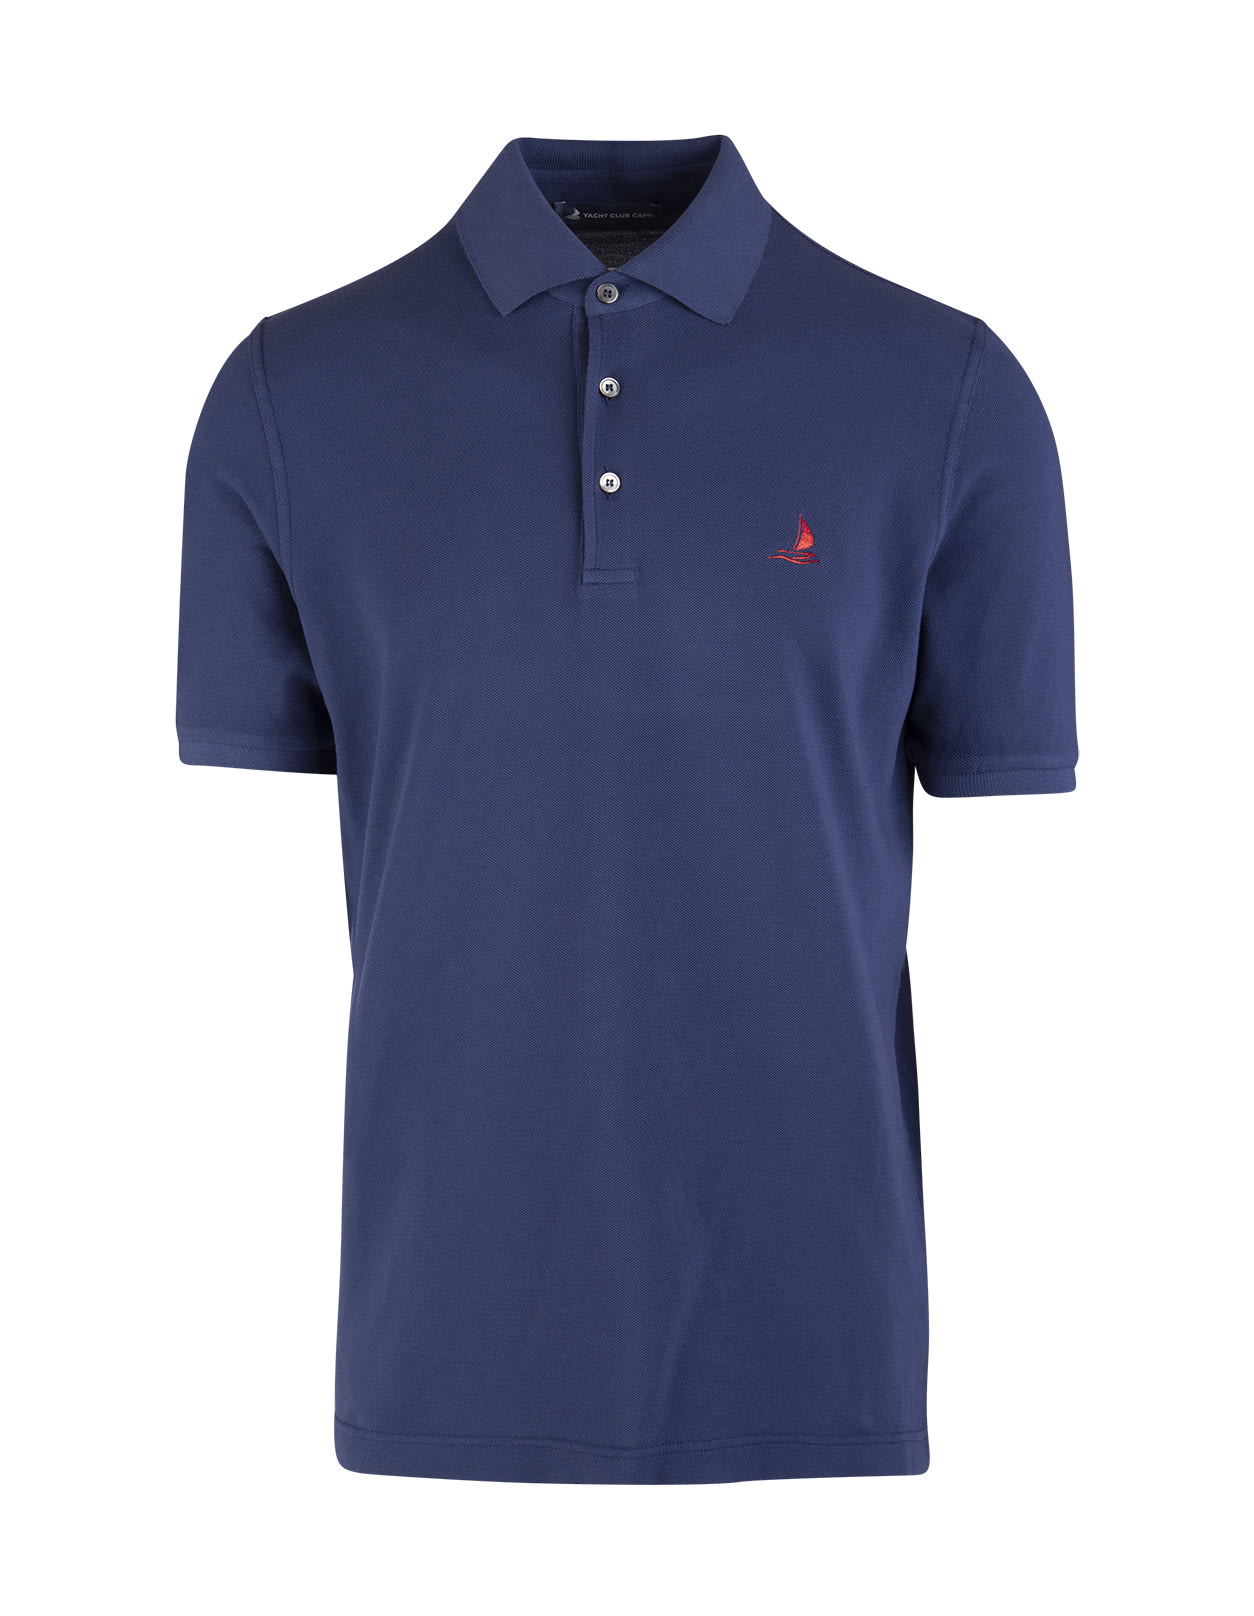 Fedeli Man - Dark Blue Pique Polo Shirt With Red Yacht Club Capri Logo